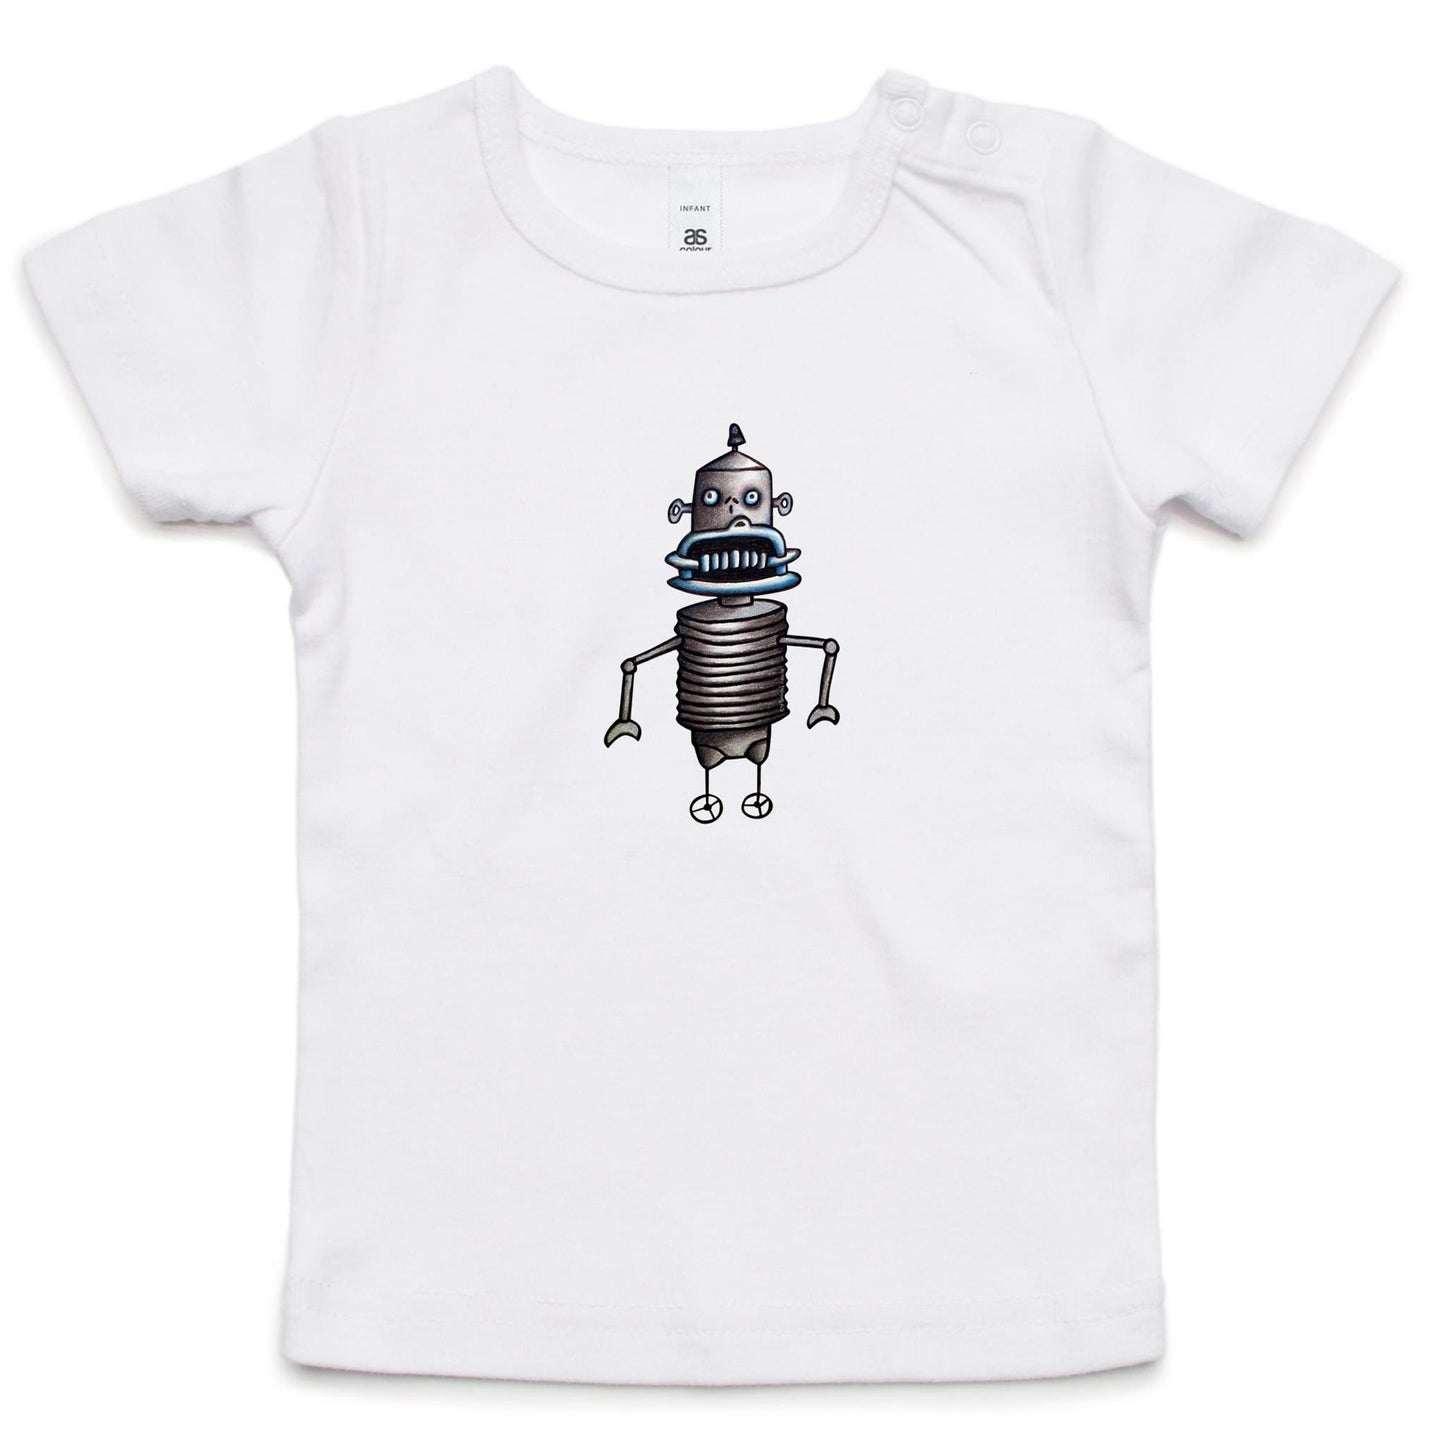 Australian Robot T Shirts for Babies